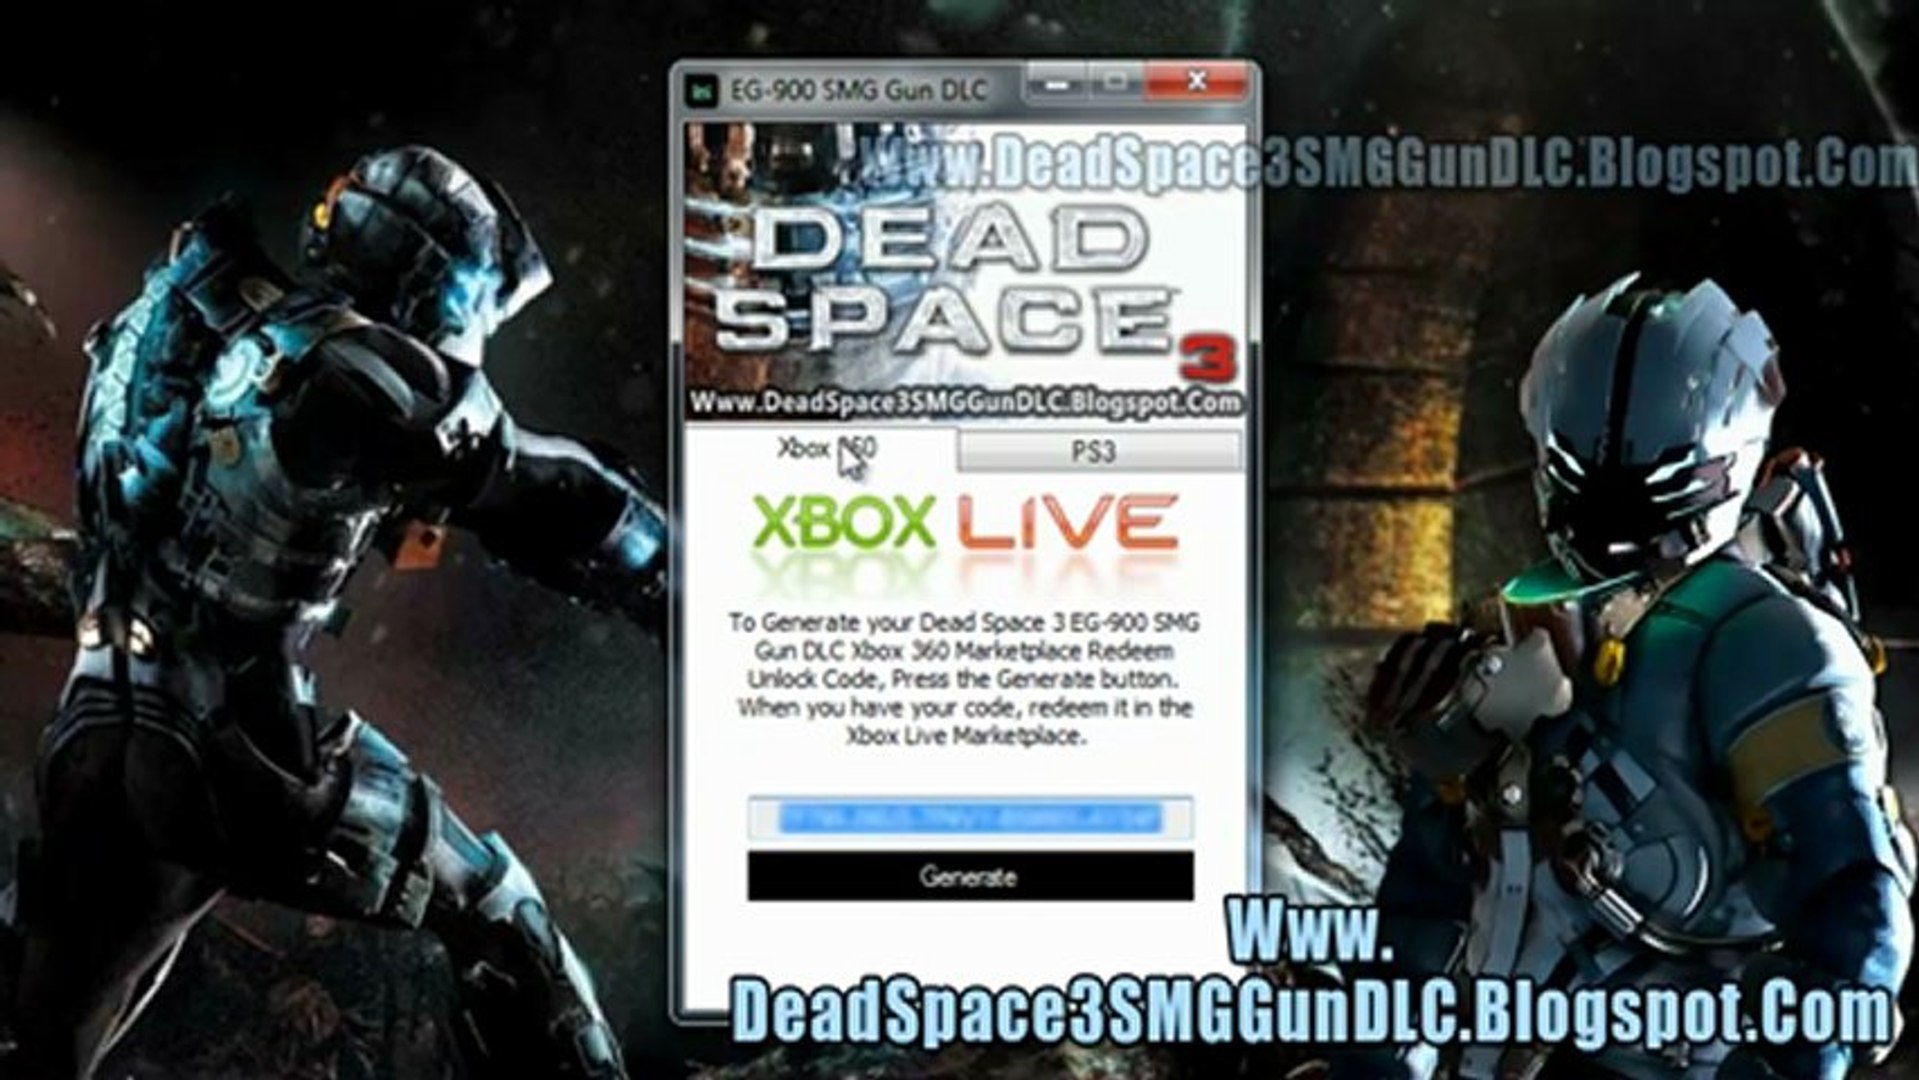 Dead Space 3 EG-900 SMG Gun DLC Free Download - video Dailymotion